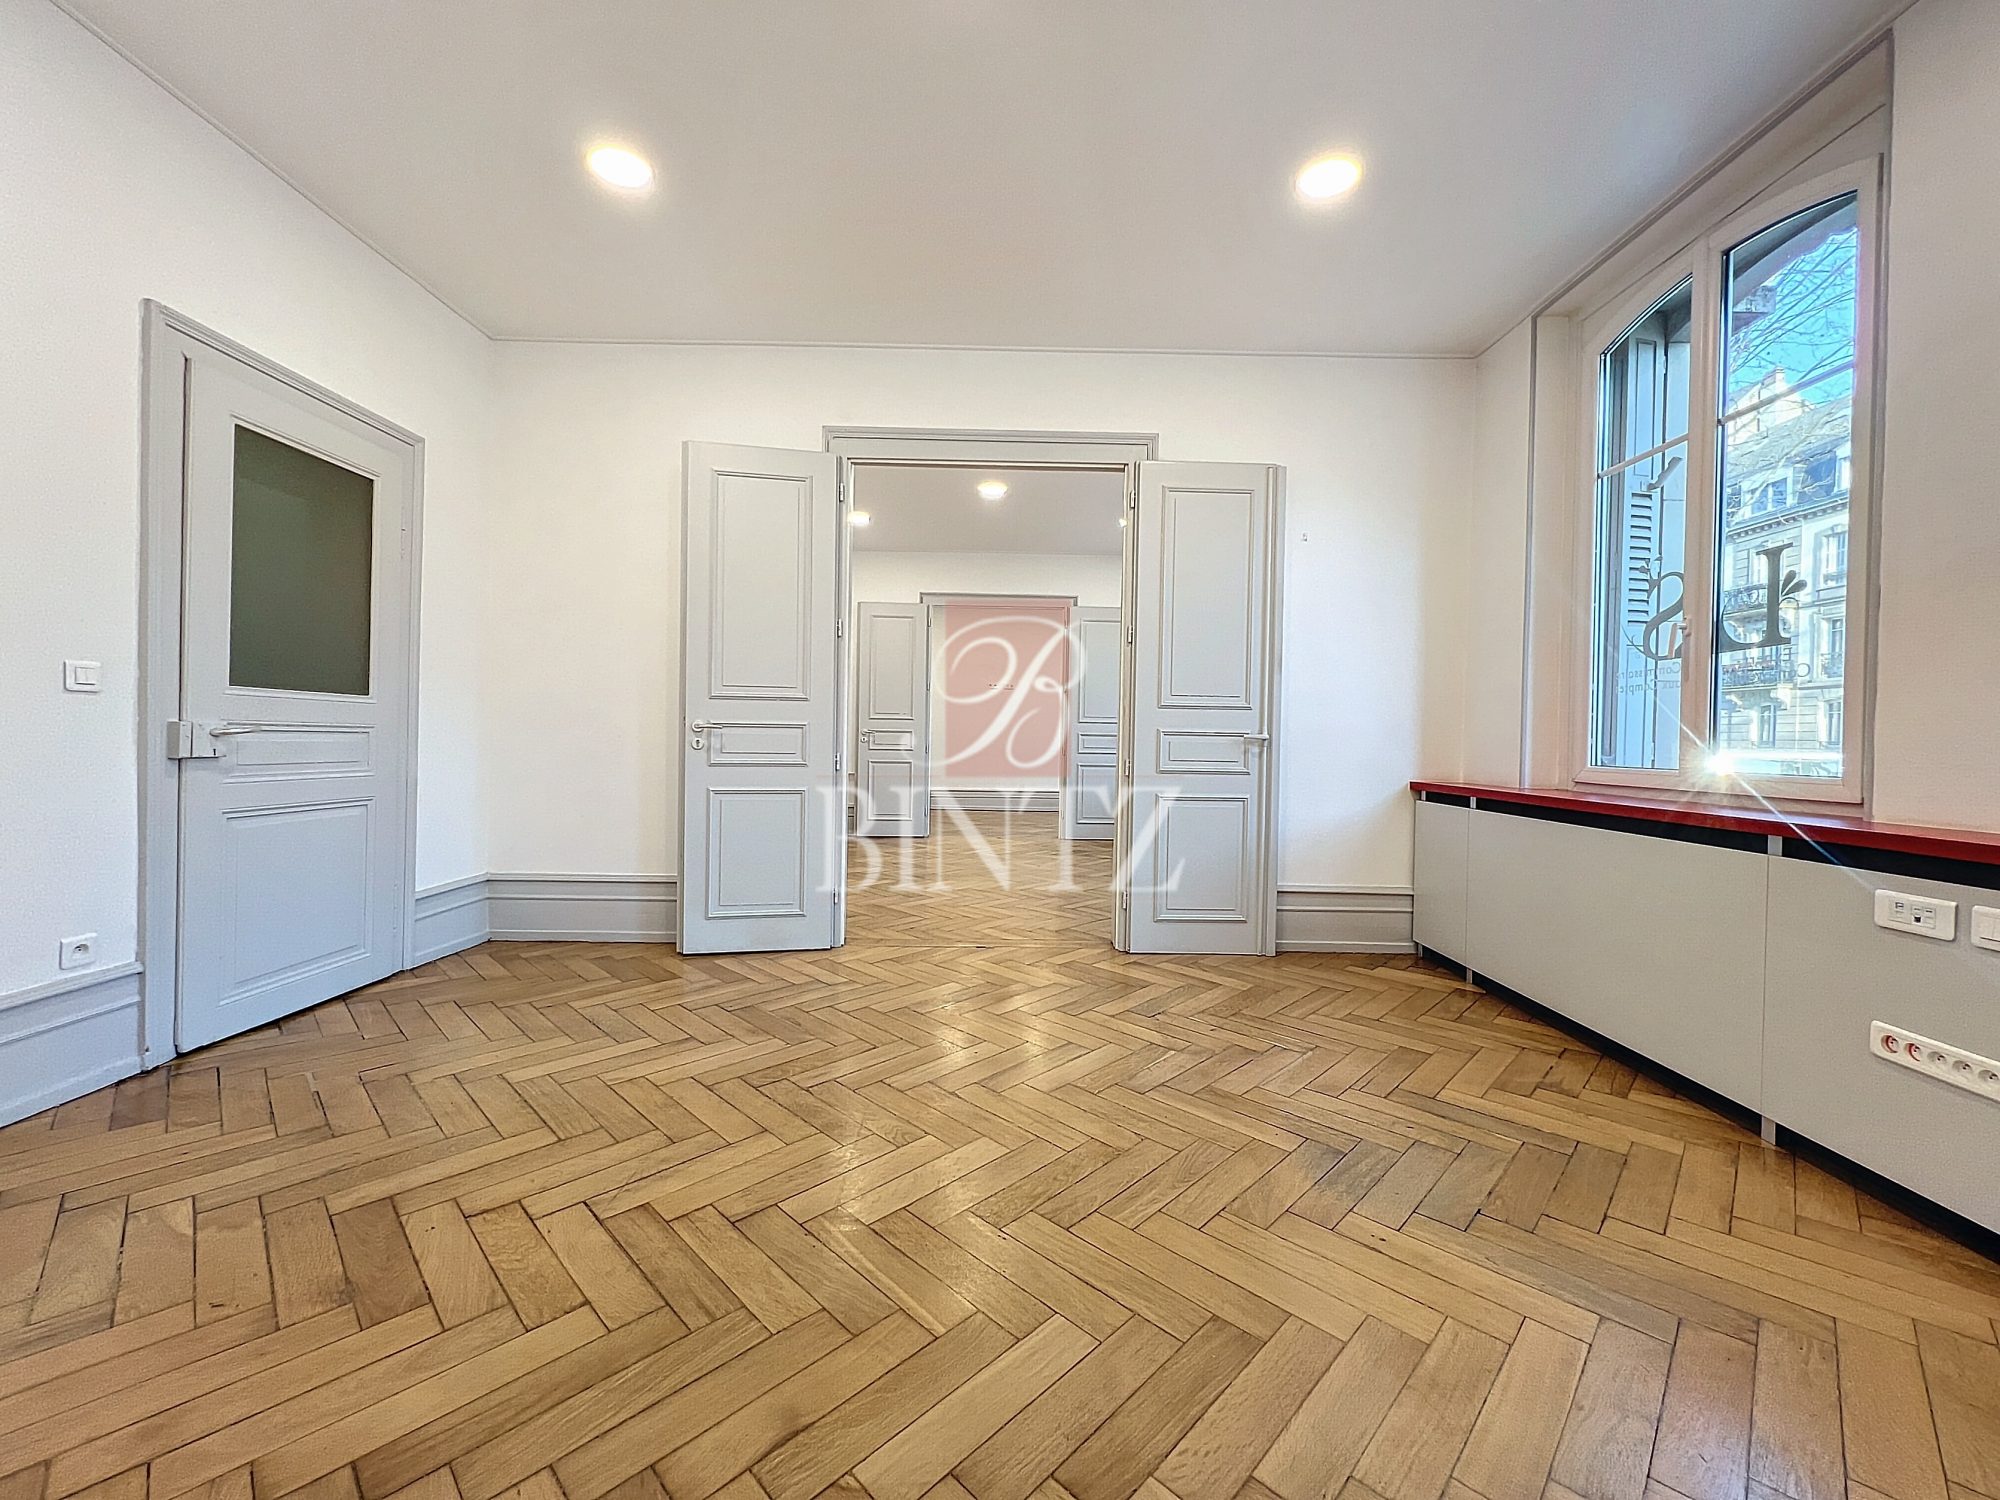 Local professionnel Neustadt - maison à vendre Strasbourg - Bintz Immobilier - 1